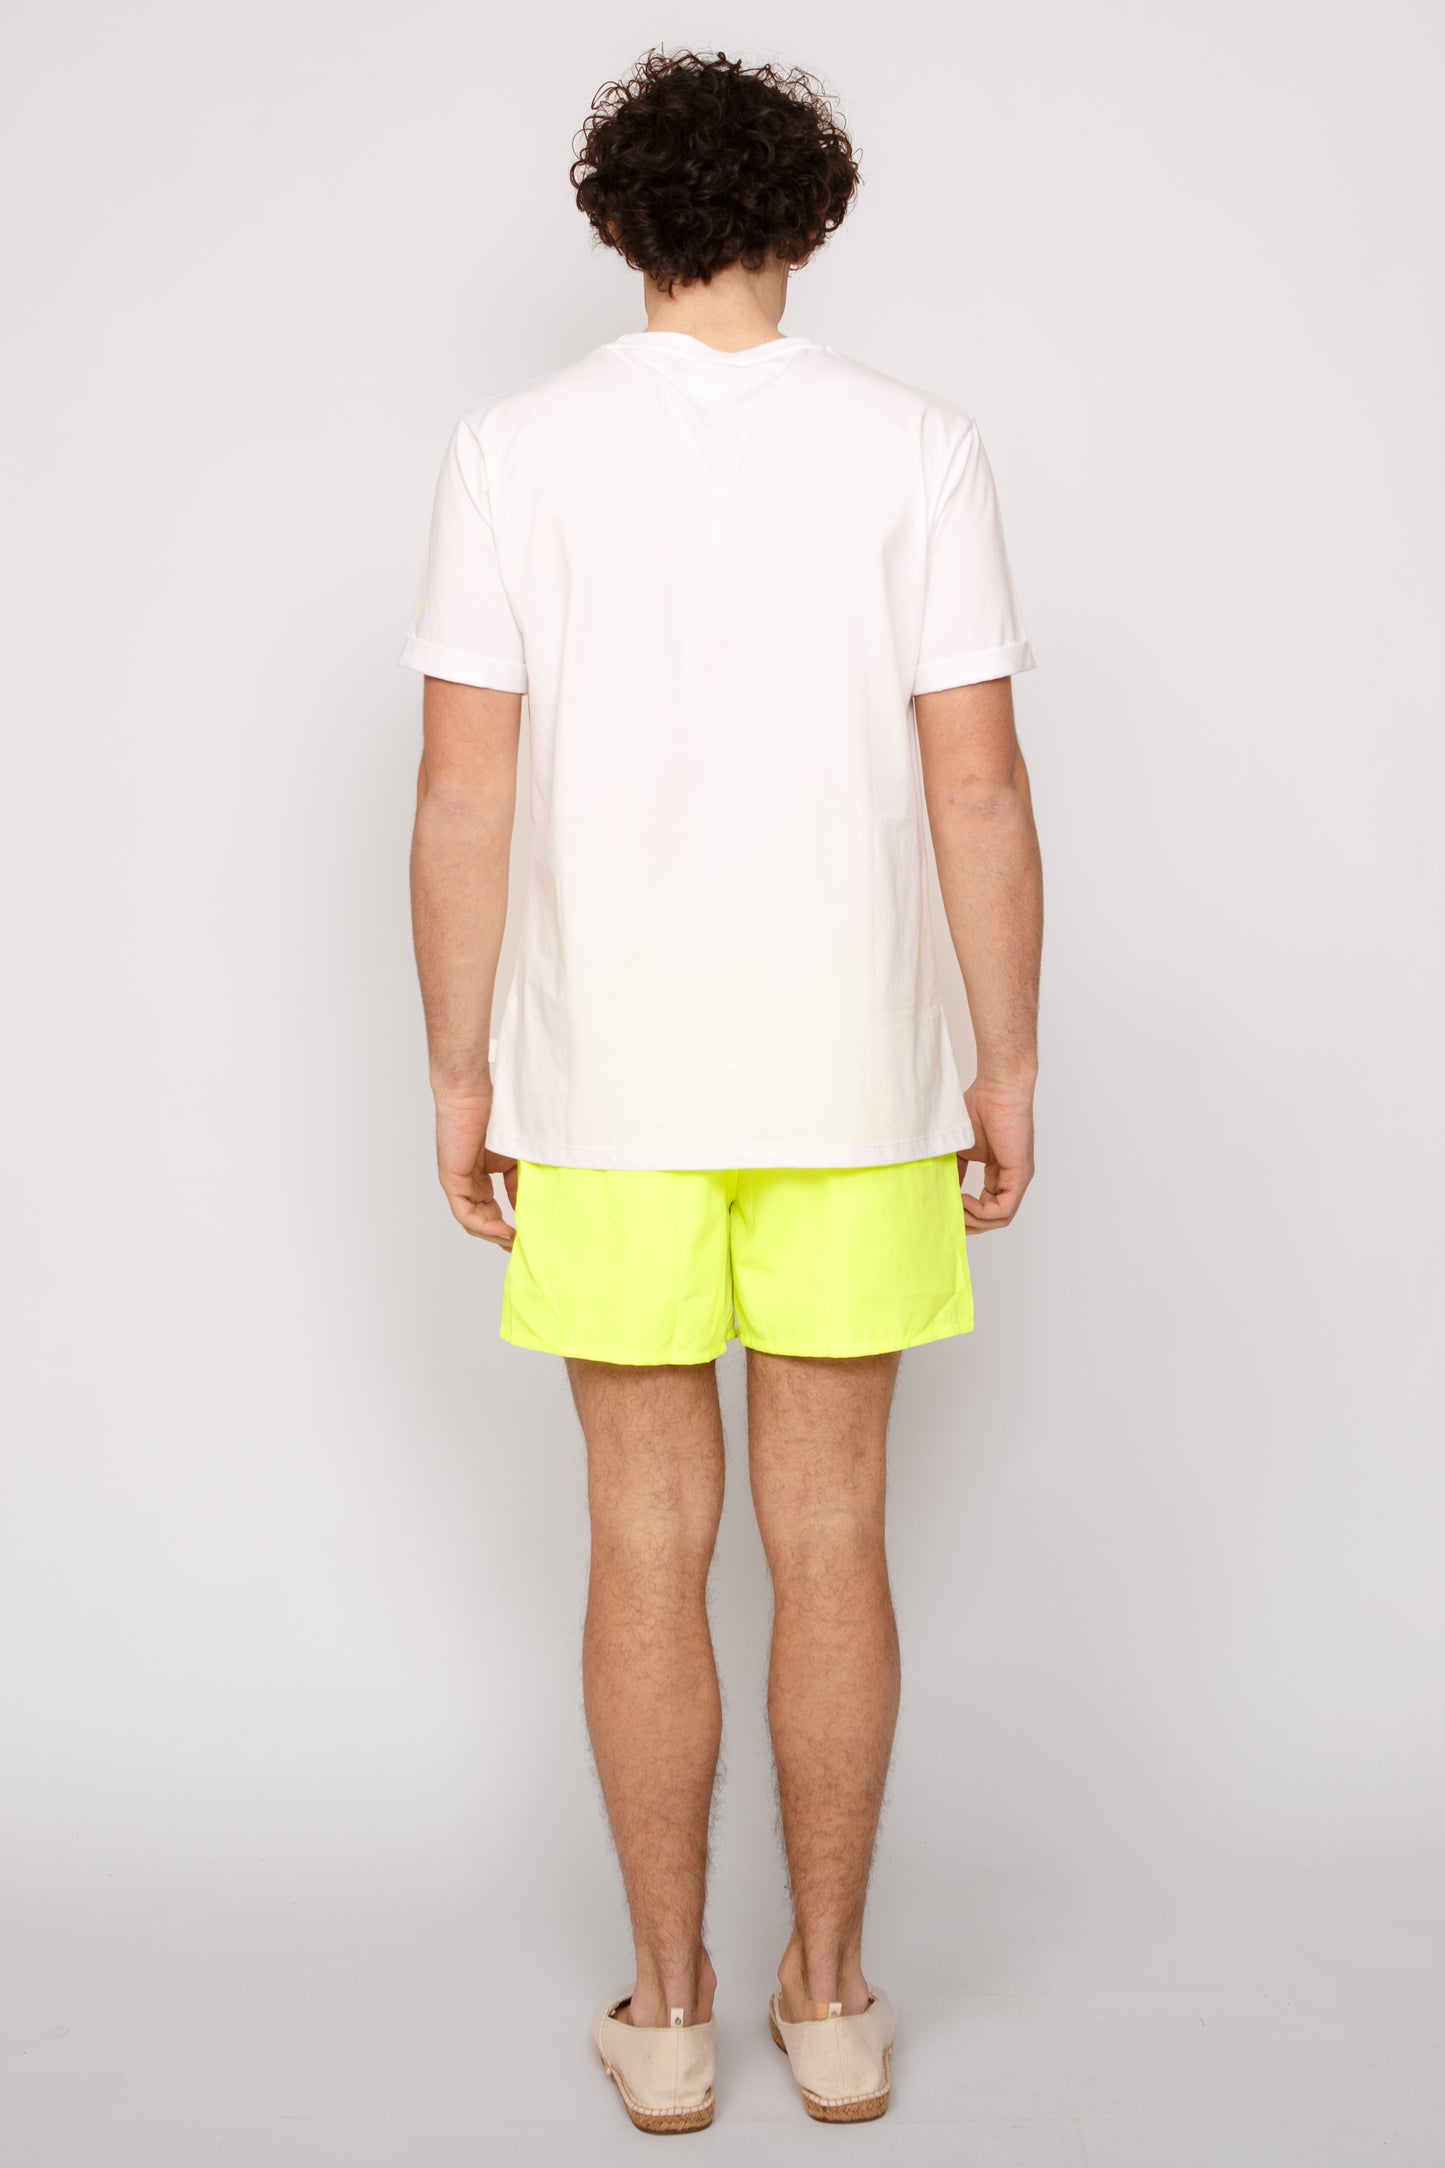 Unitofluo - T-shirt bianca stampa giallo fluo